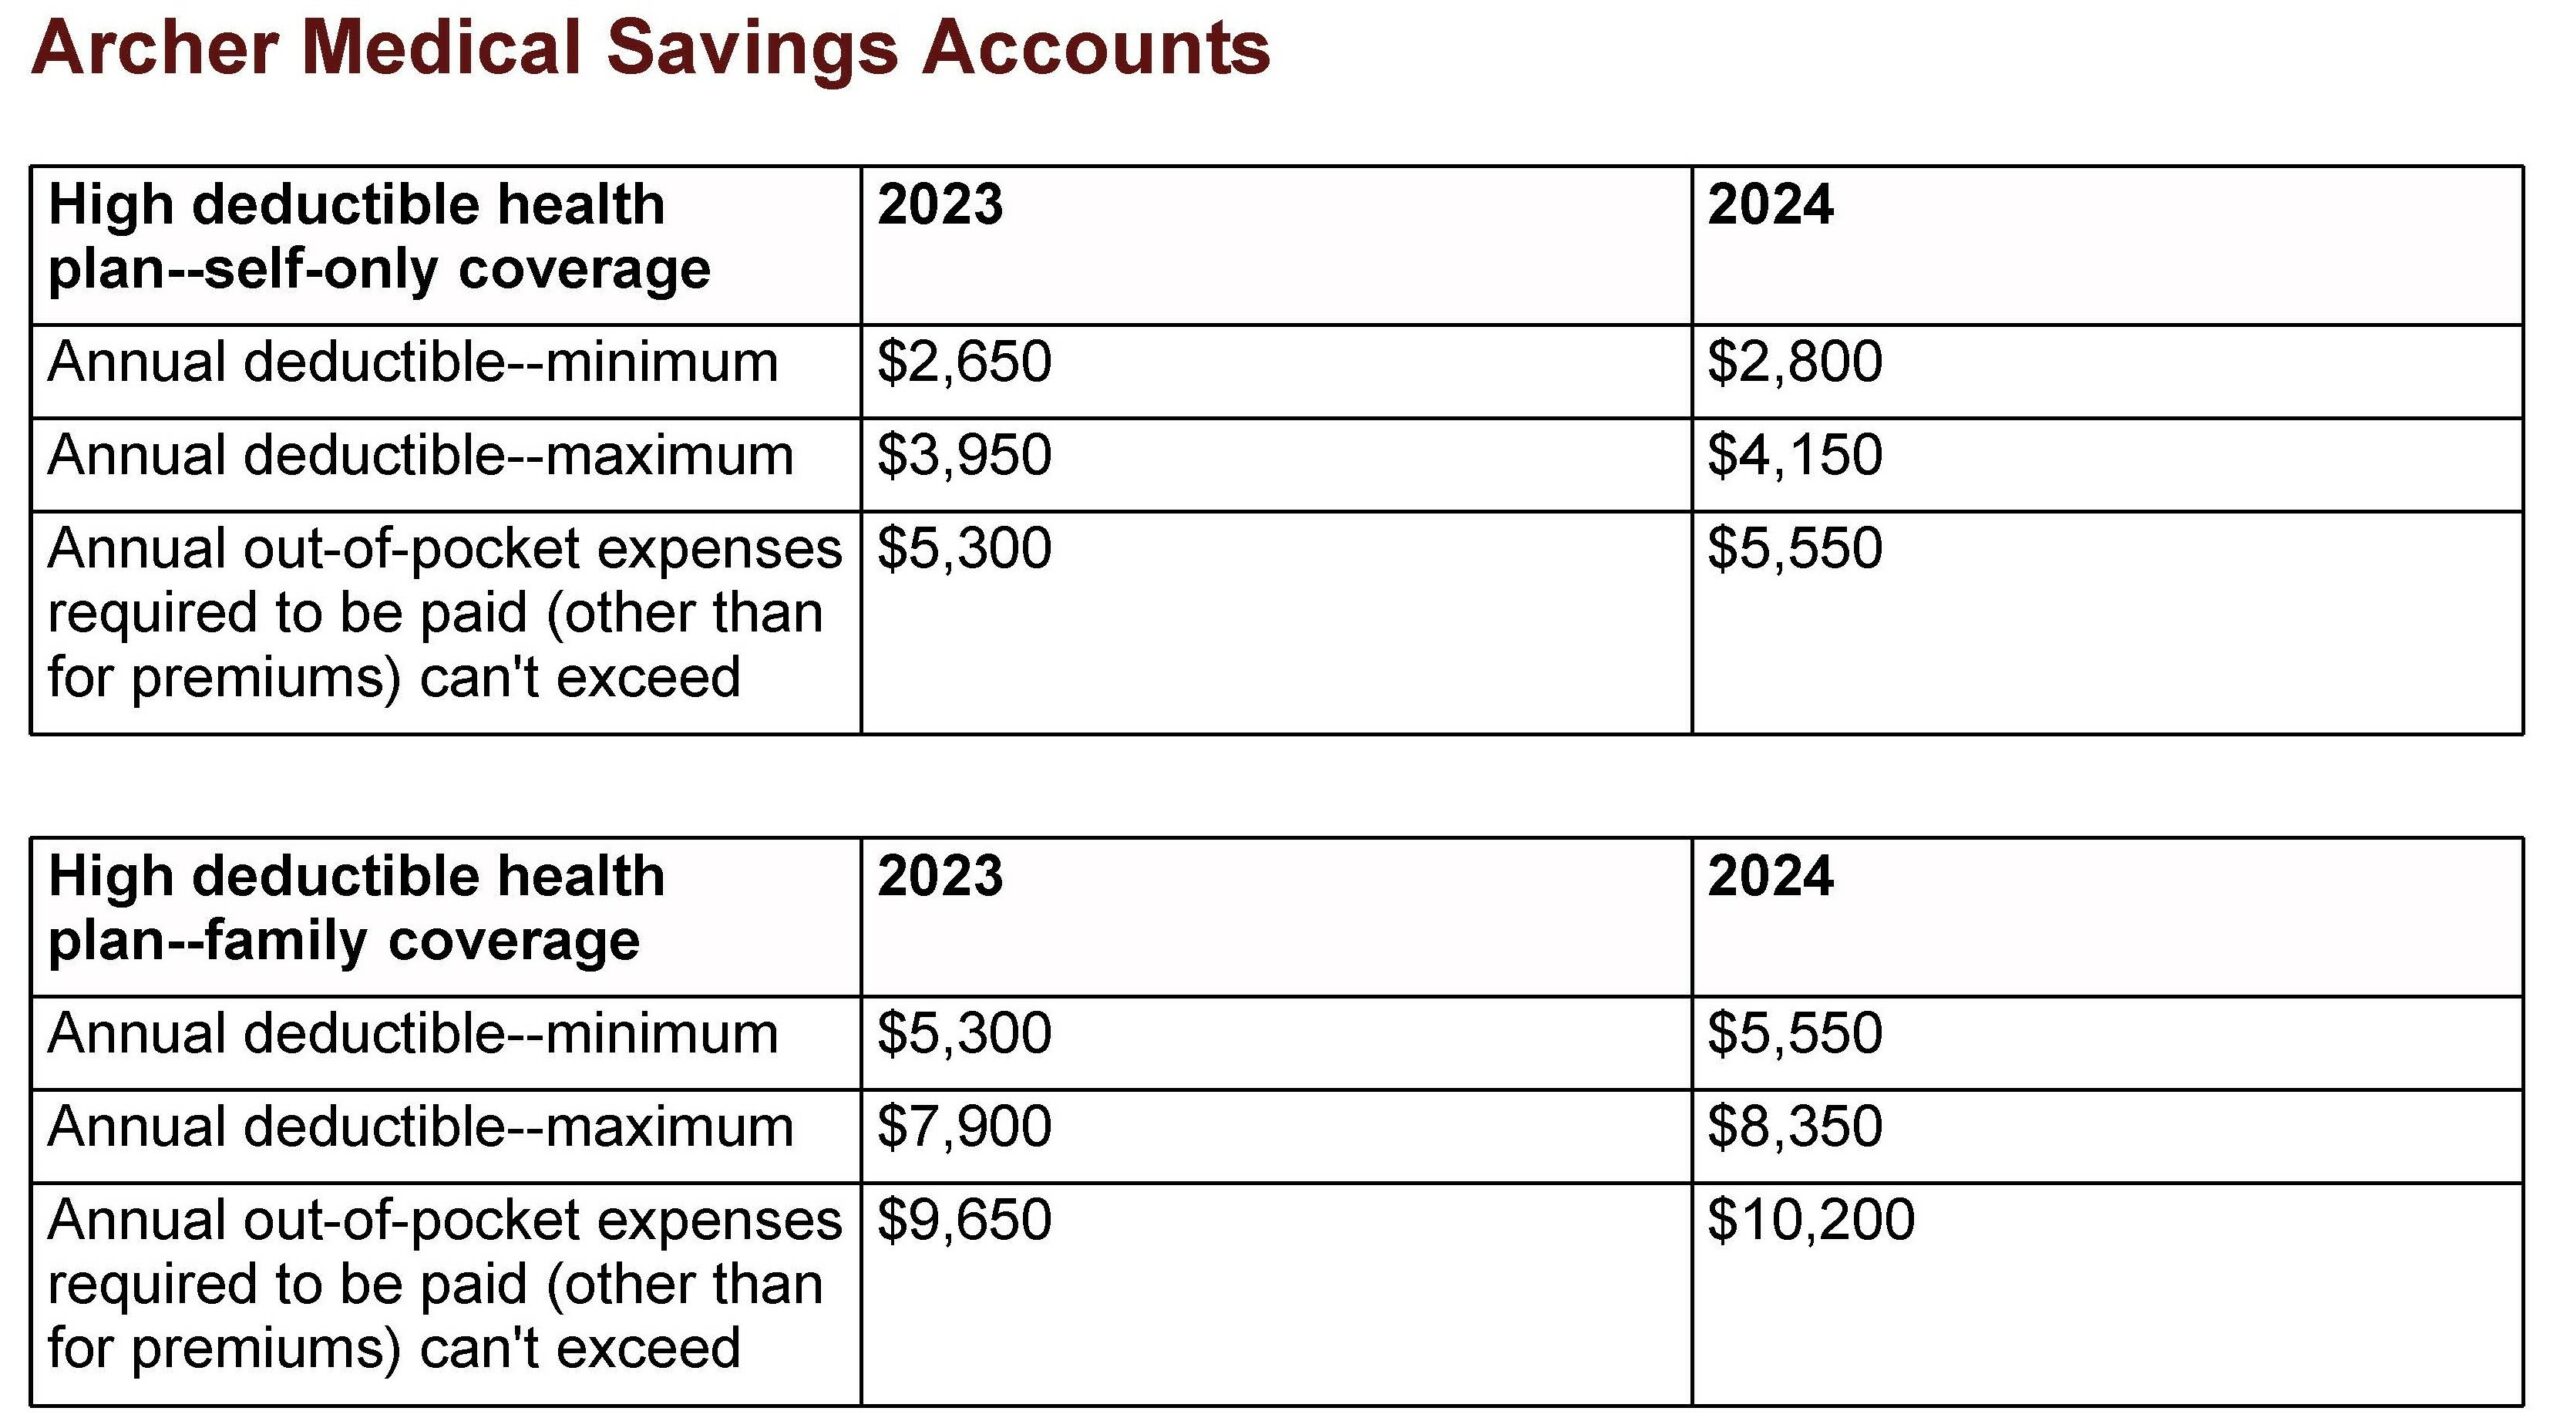 Archer Medical Savings Accounts